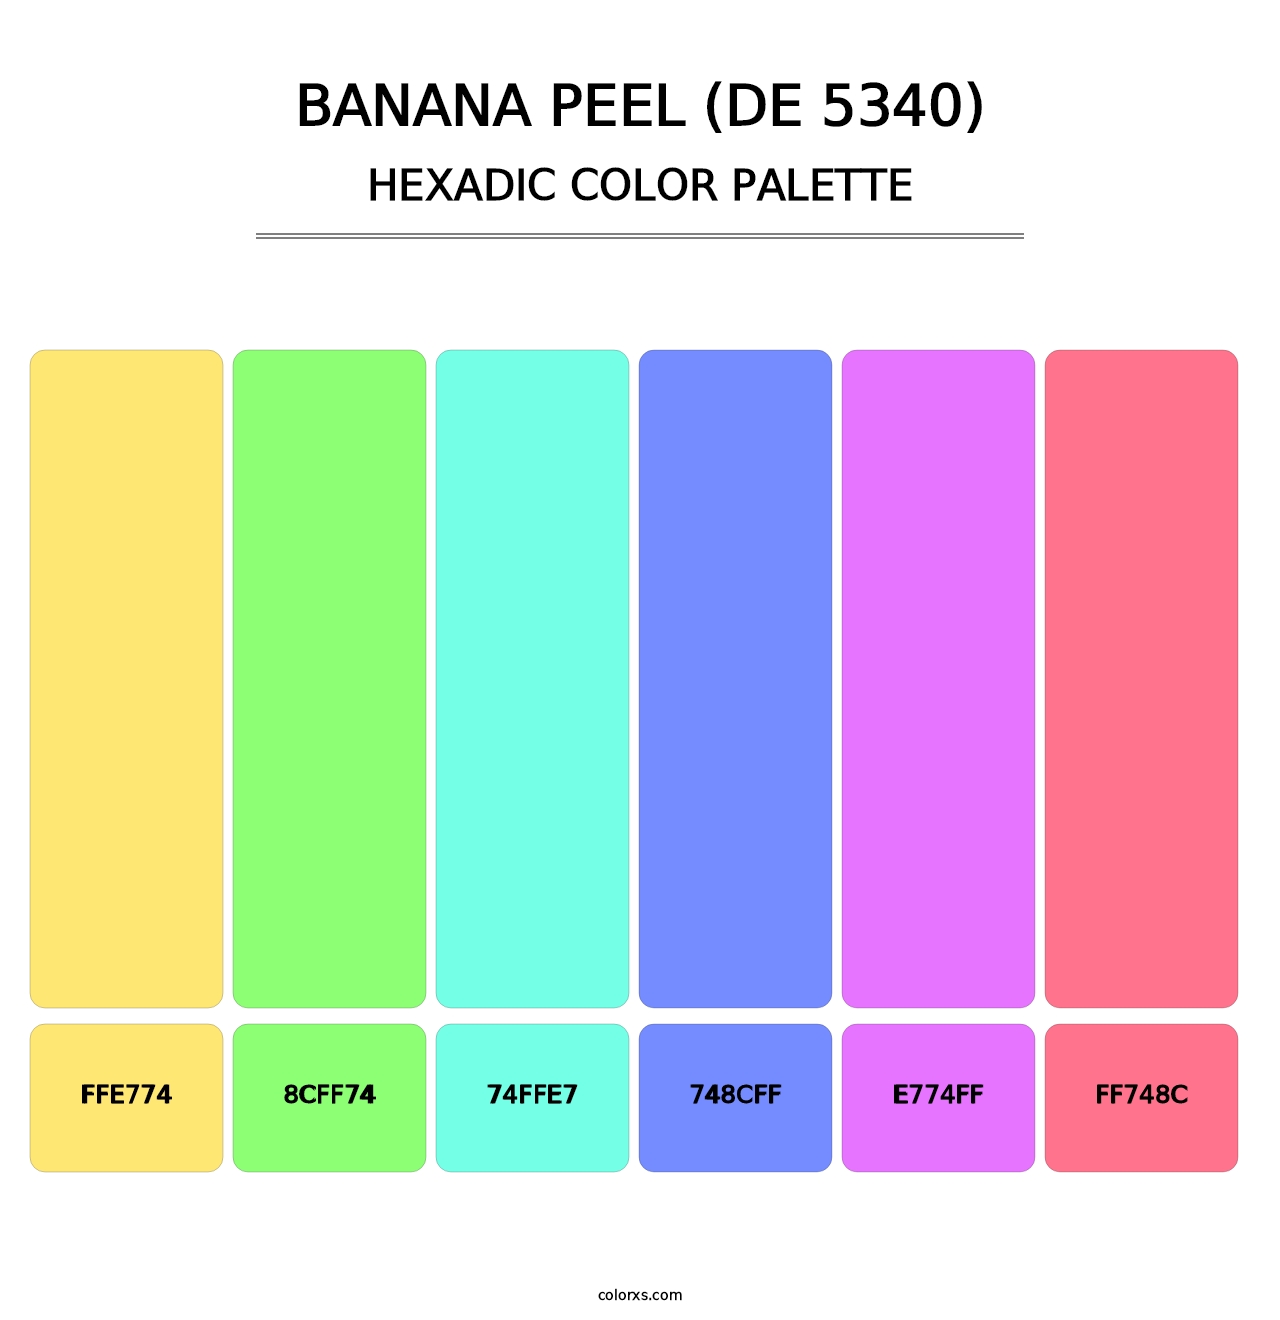 Banana Peel (DE 5340) - Hexadic Color Palette